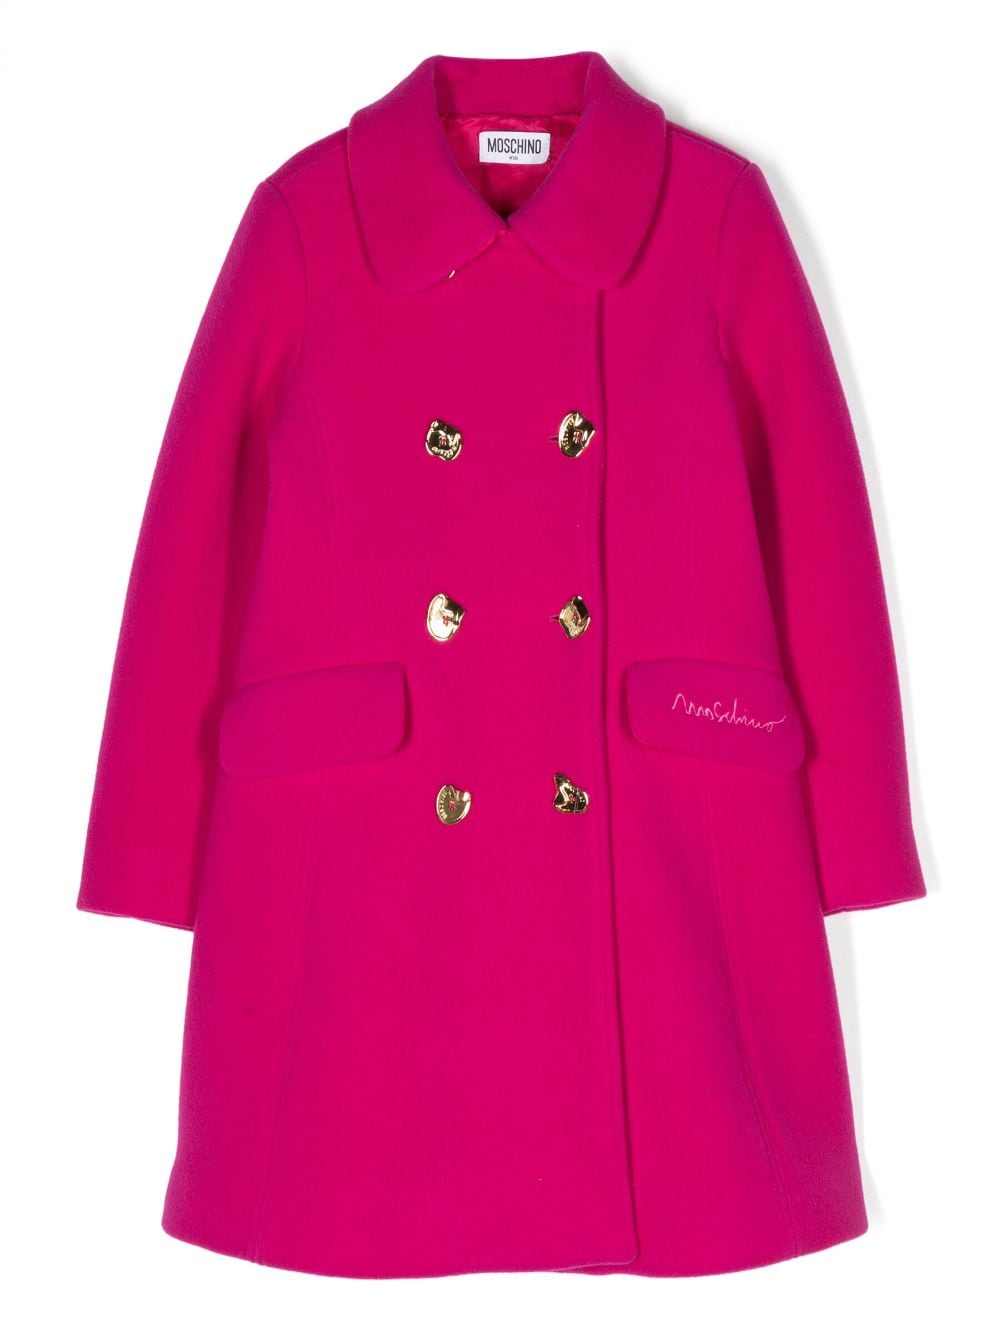 Manteau rose fille